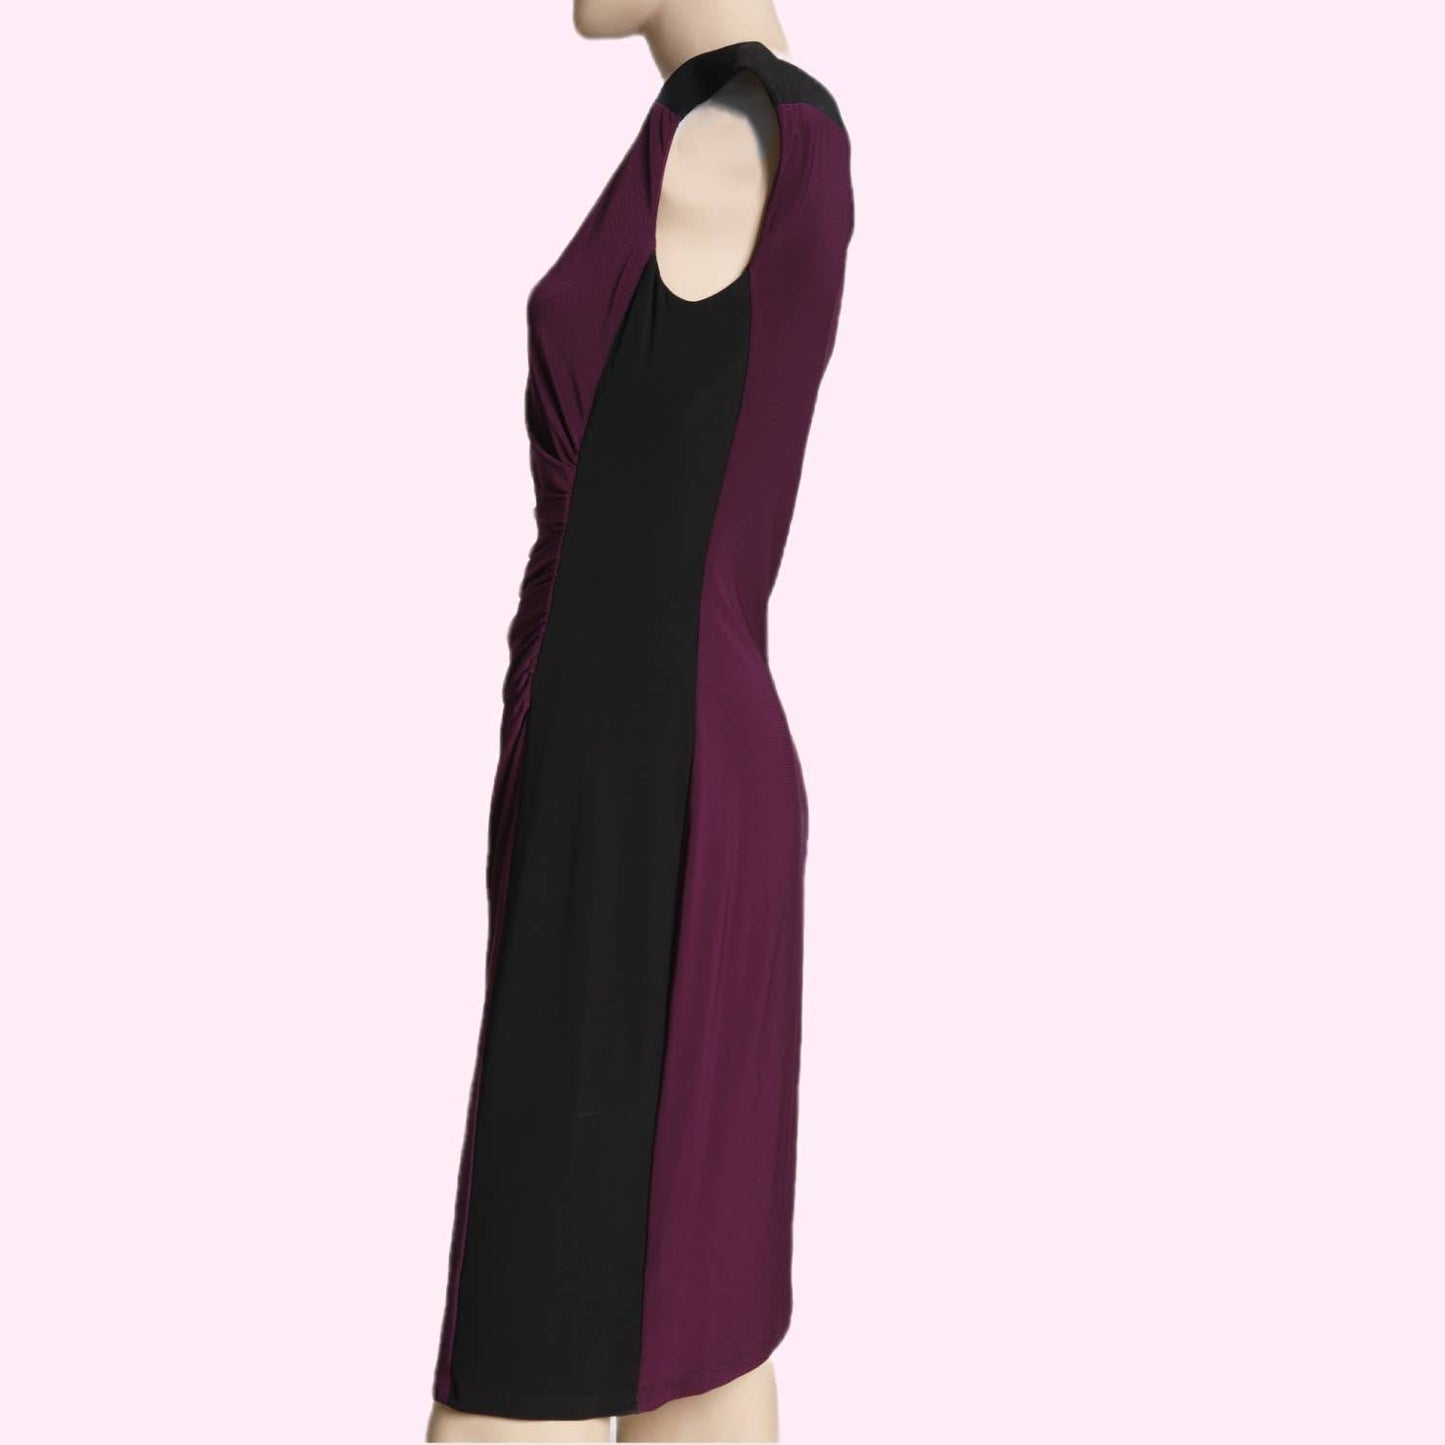 RALPH LAUREN Purple and Black Short Sleeve Dress